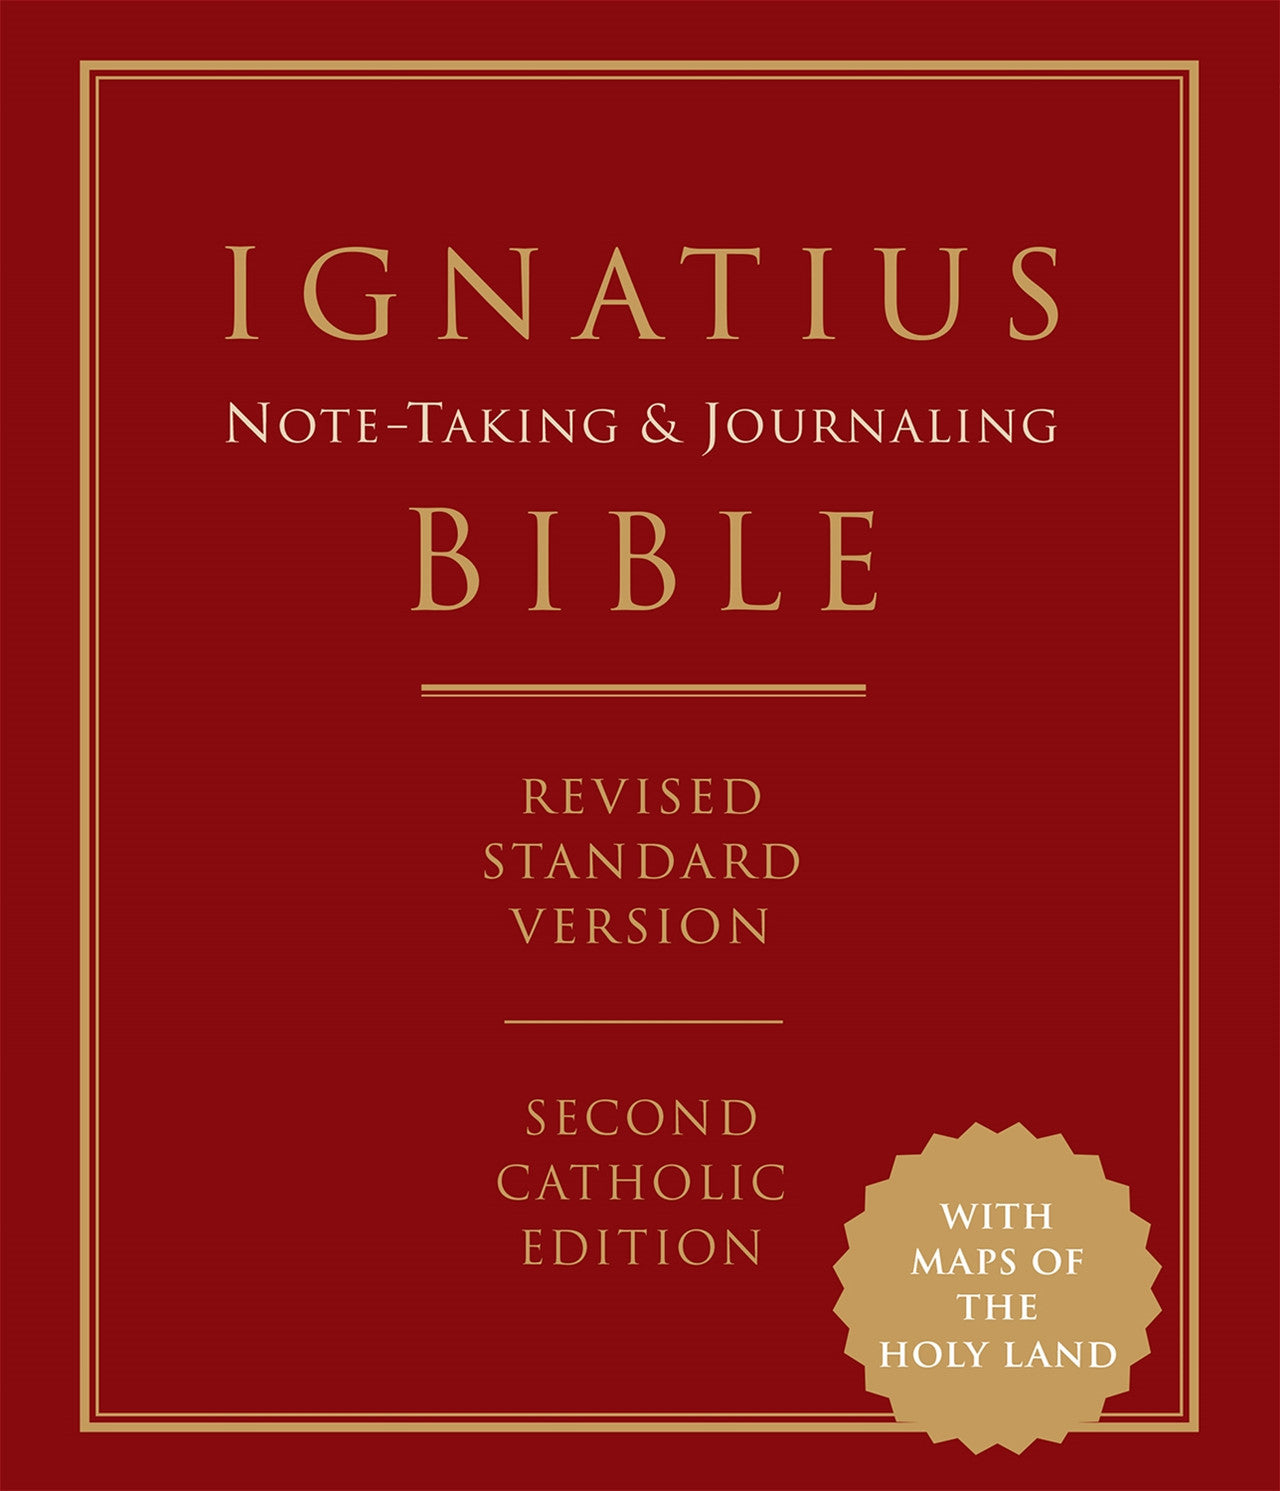 Ignatius Note-Taking and Journaling Bible